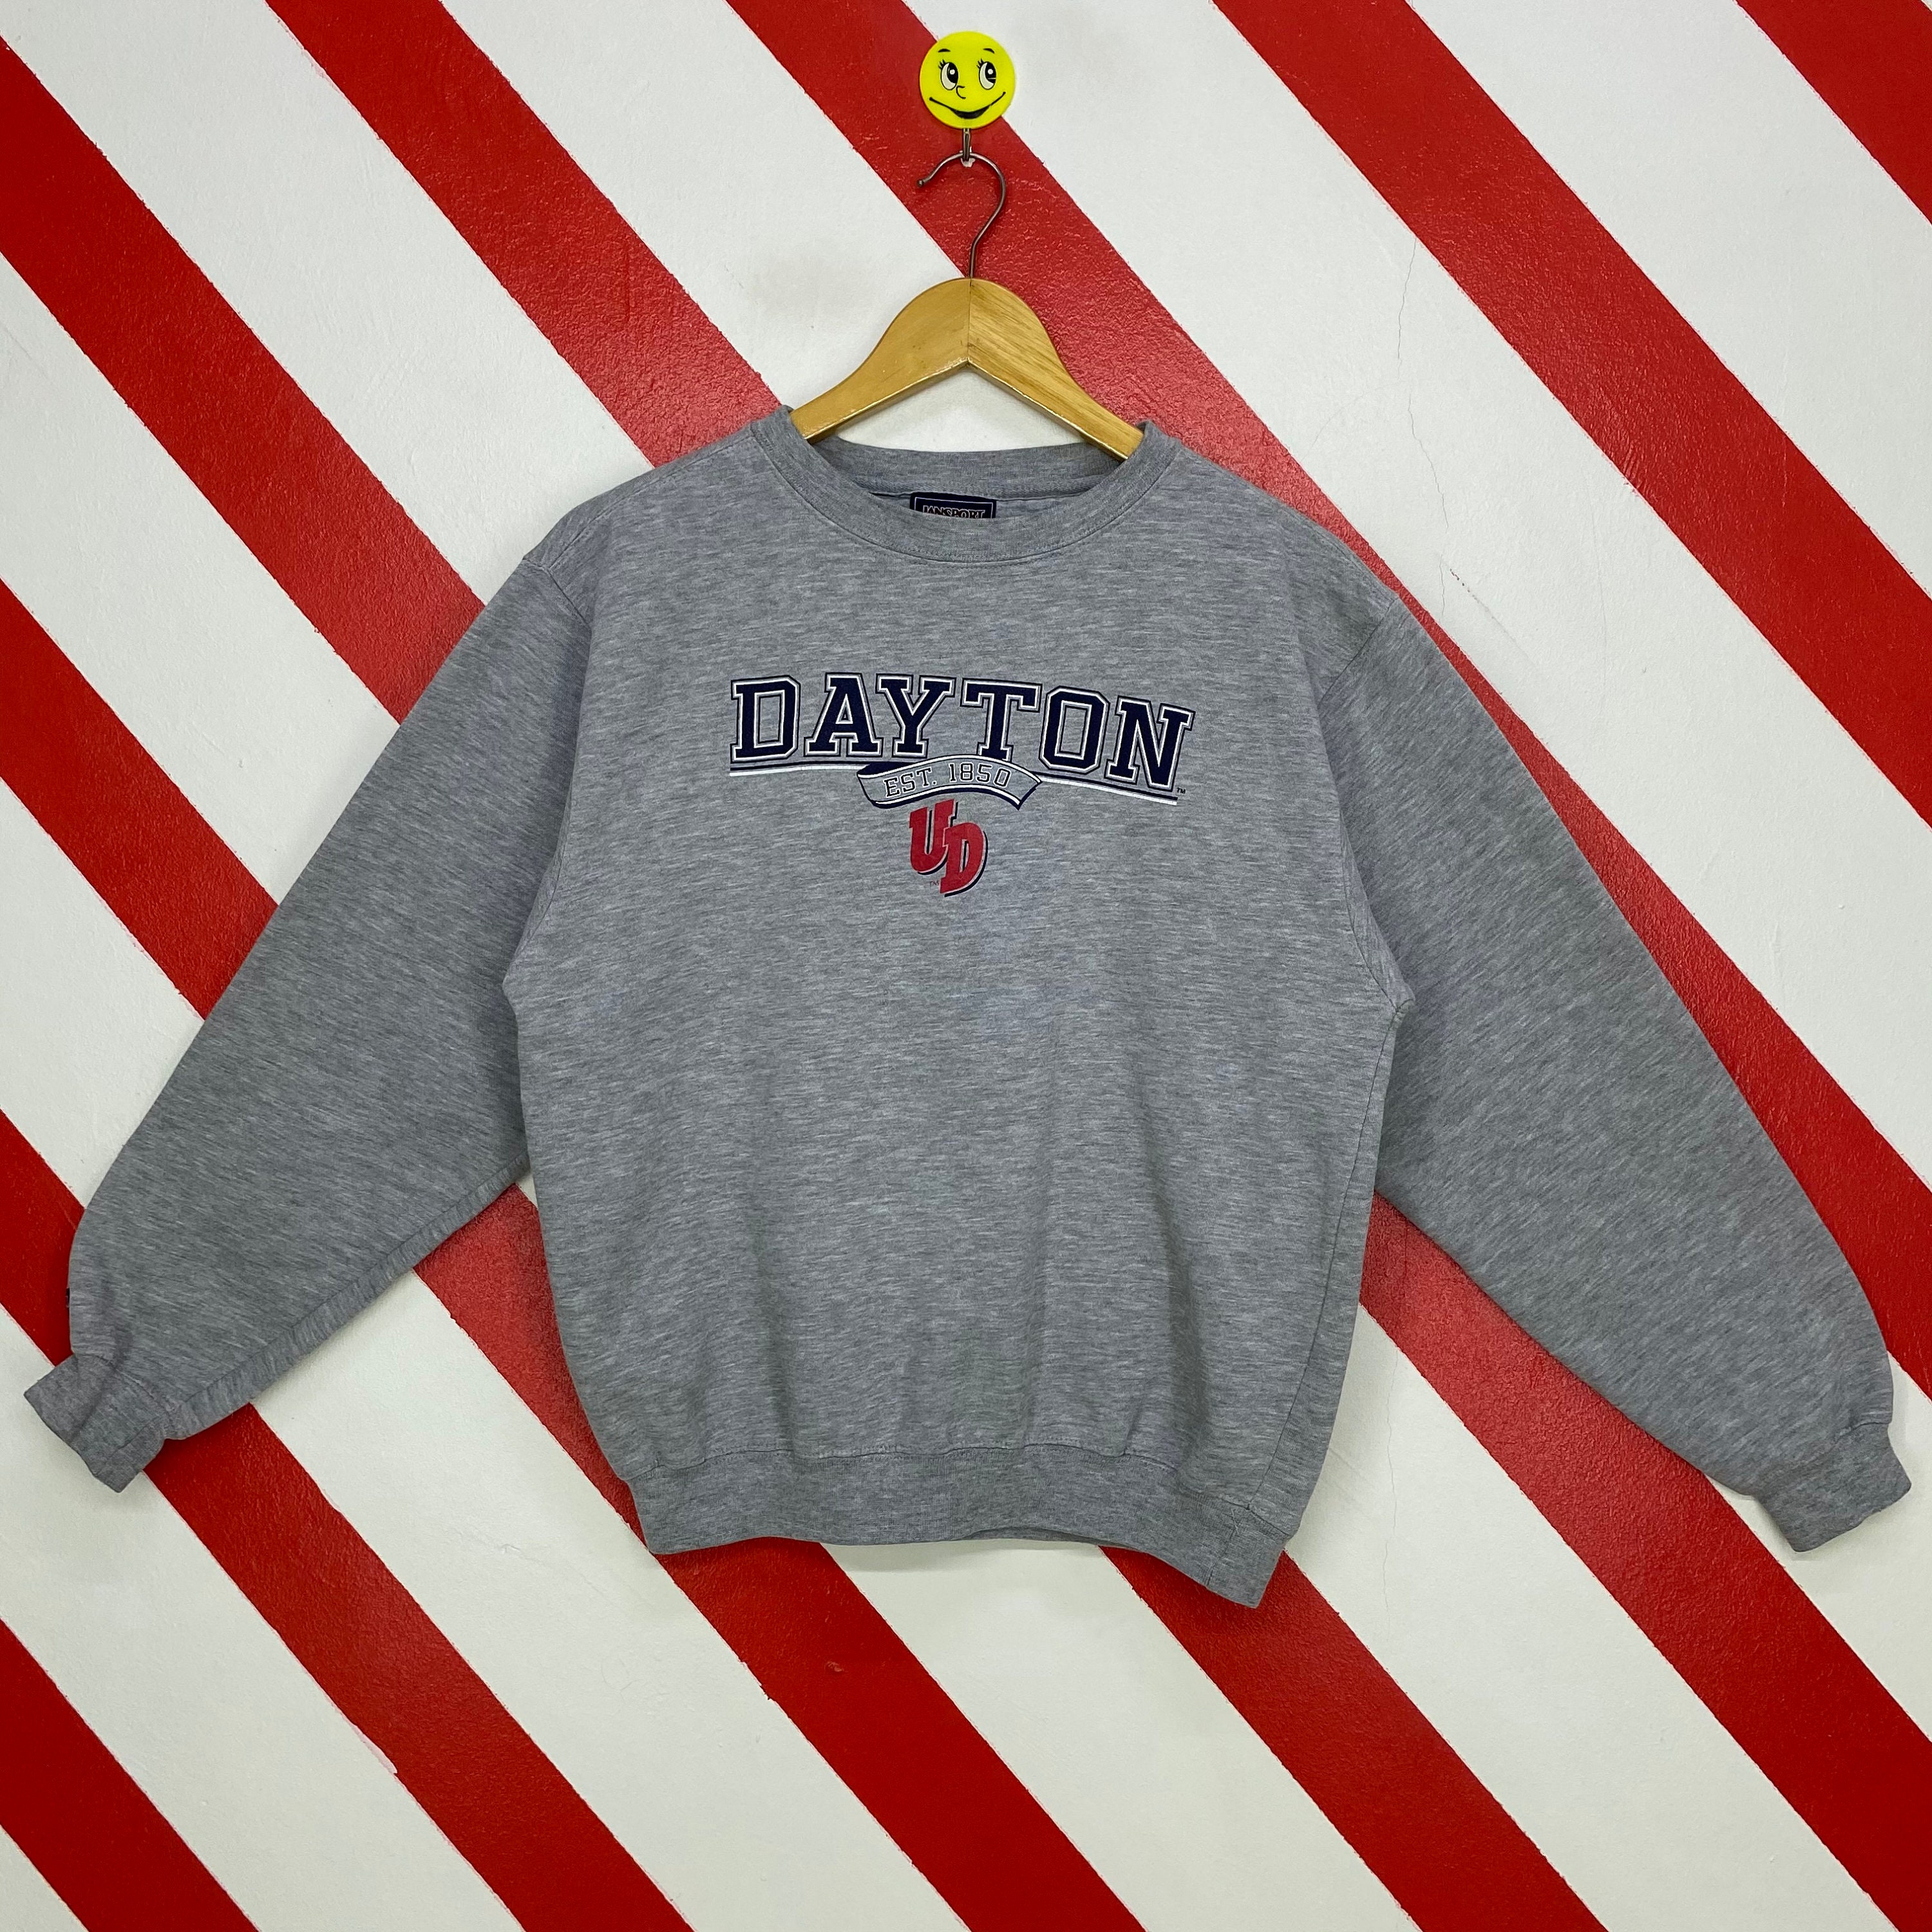 Vintage University Dayton Sweatshirt Dayton Crewneck Dayton | Etsy